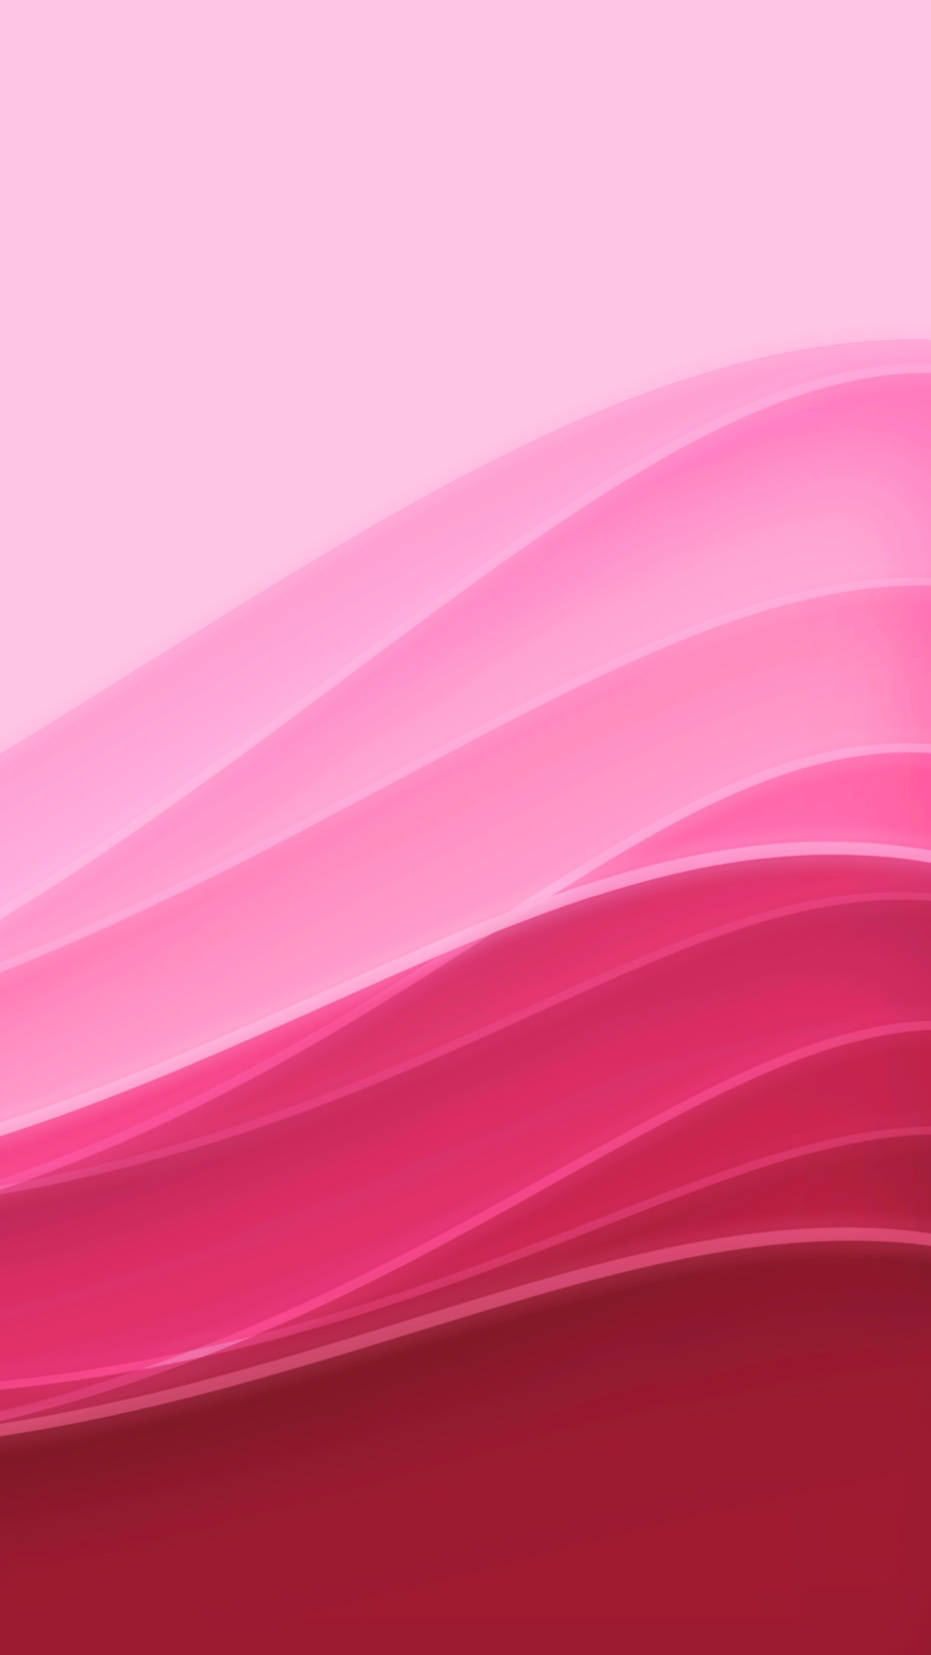 Plain Pink Gradient Waves Iphone Background